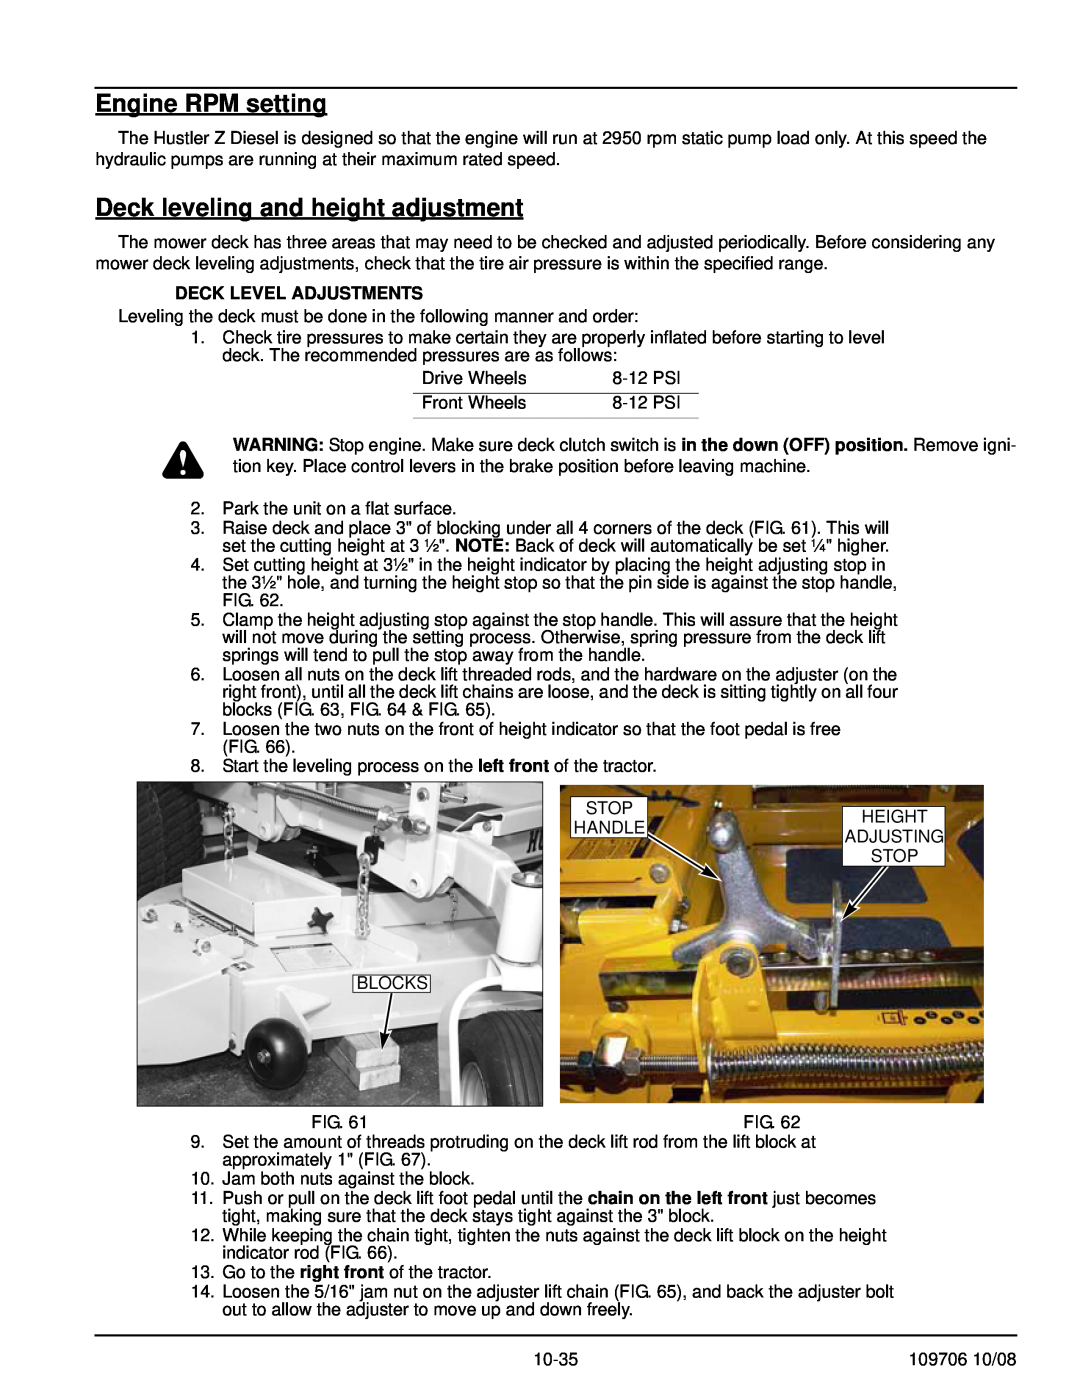 Hustler Turf Diesel Z manual Engine RPM setting, Deck leveling and height adjustment, Deck Level Adjustments 